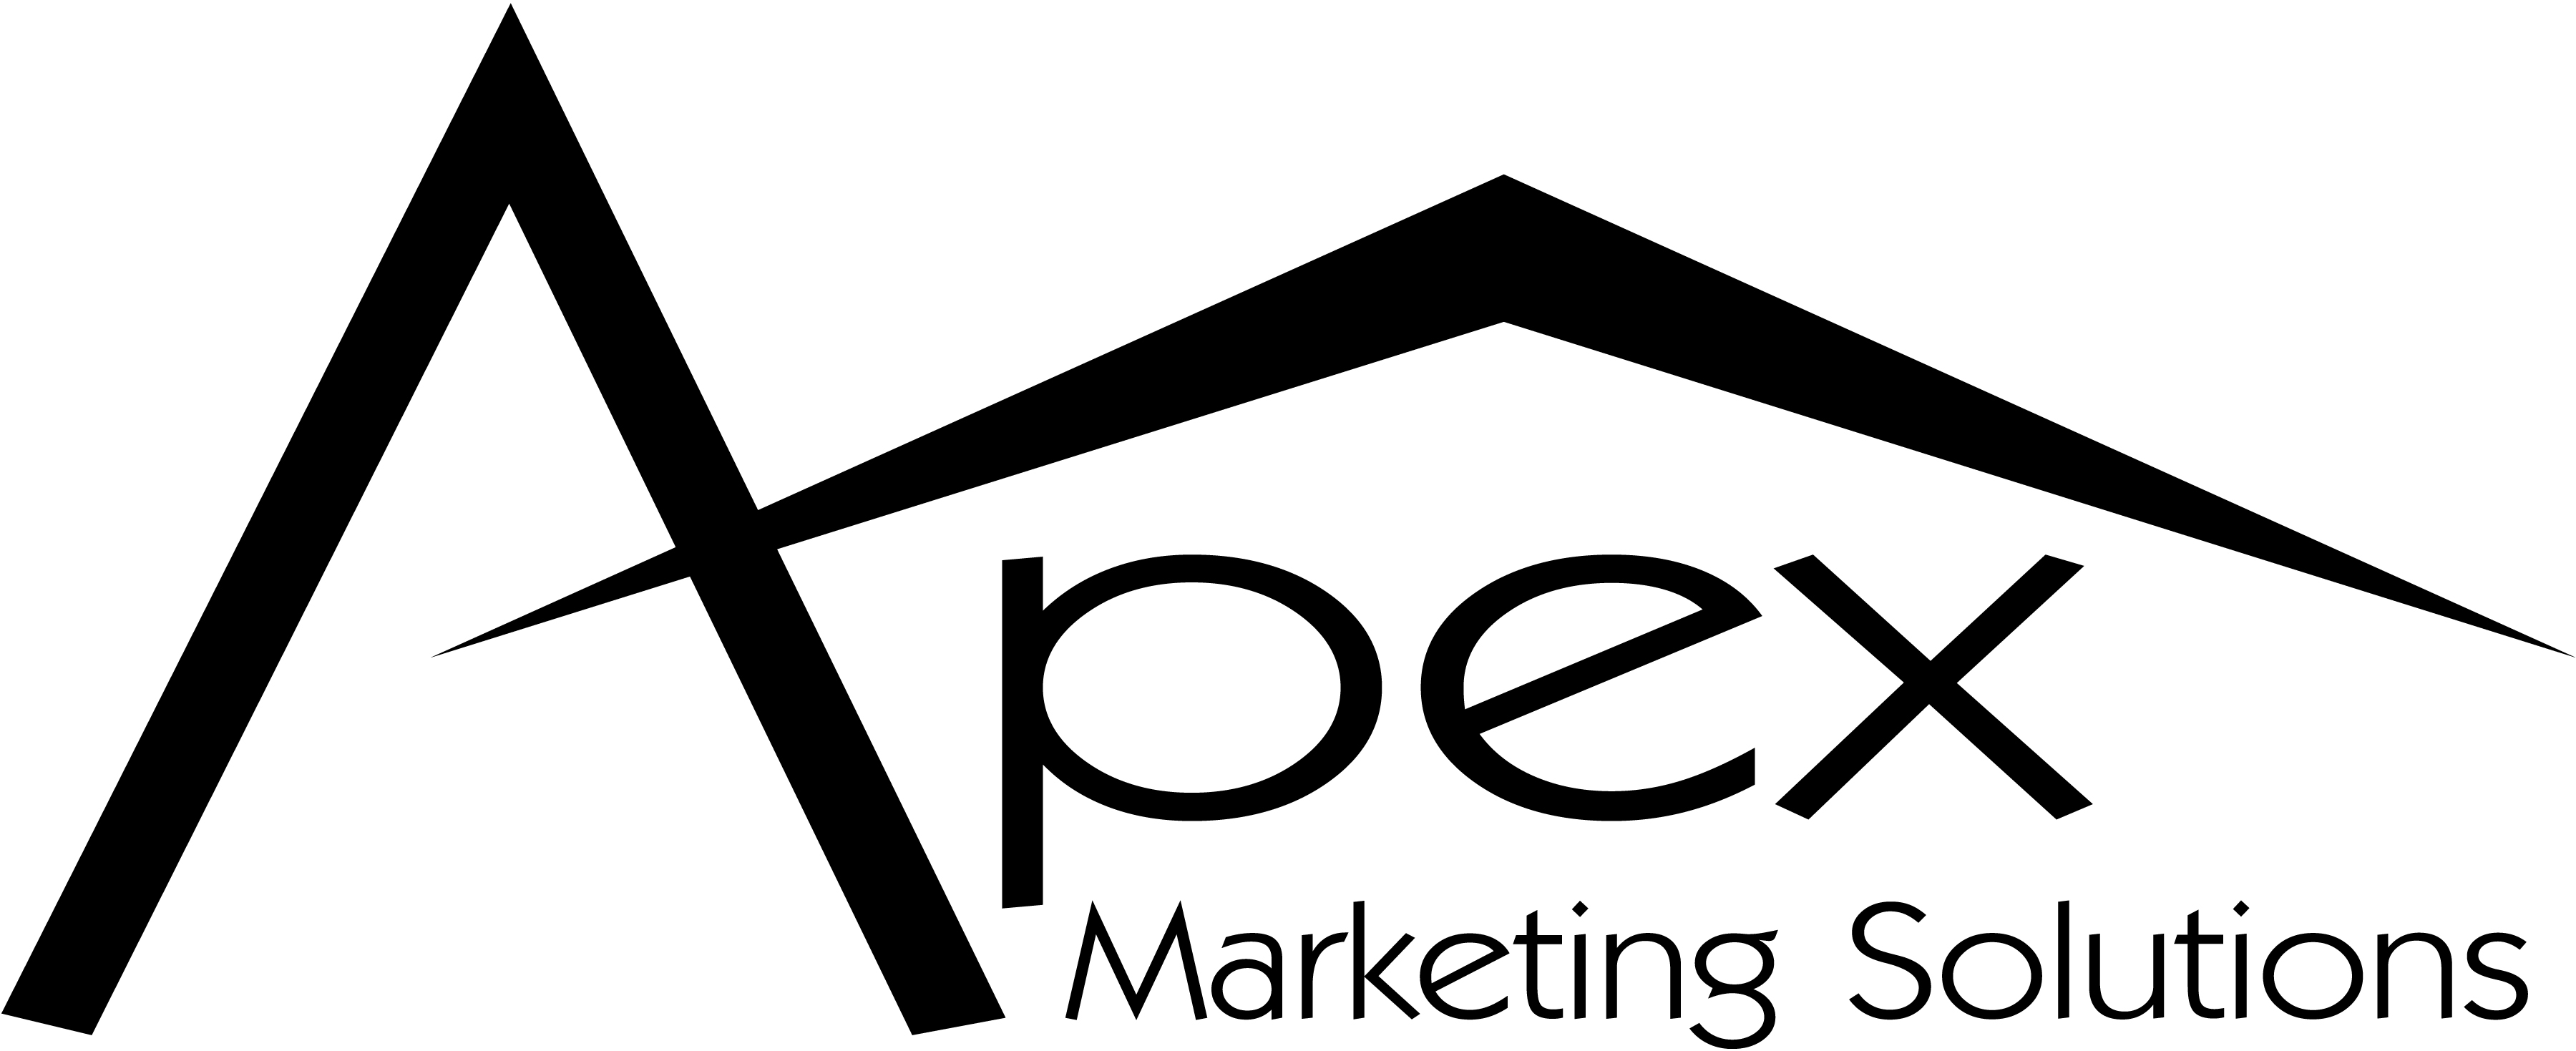 Apex Marketing Solutions